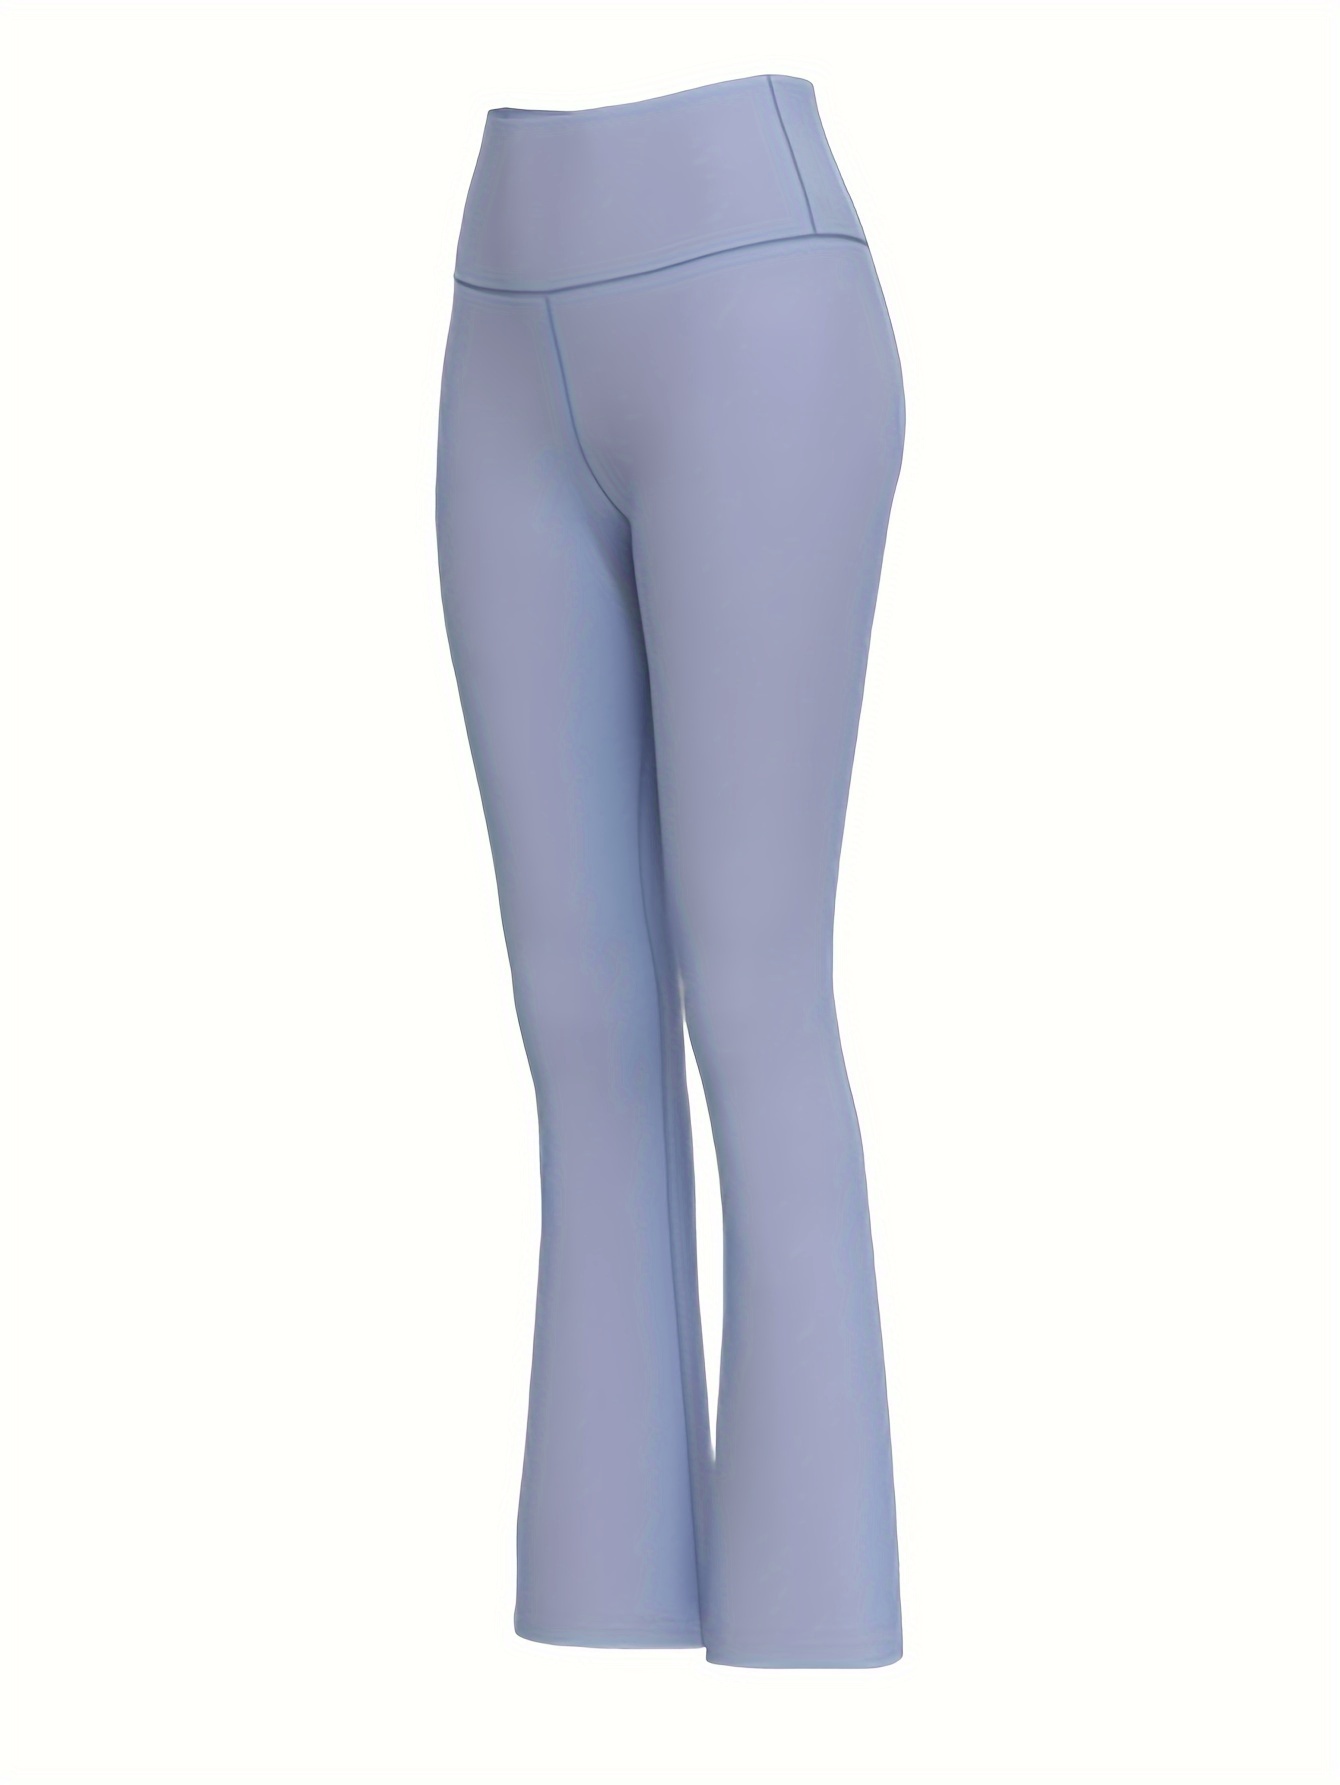 Solid Color Fleece Lined Yoga Flared Pants, Warm High Waist Fitness Wide  Leg Bell Bottom Pants, Women's Activewear